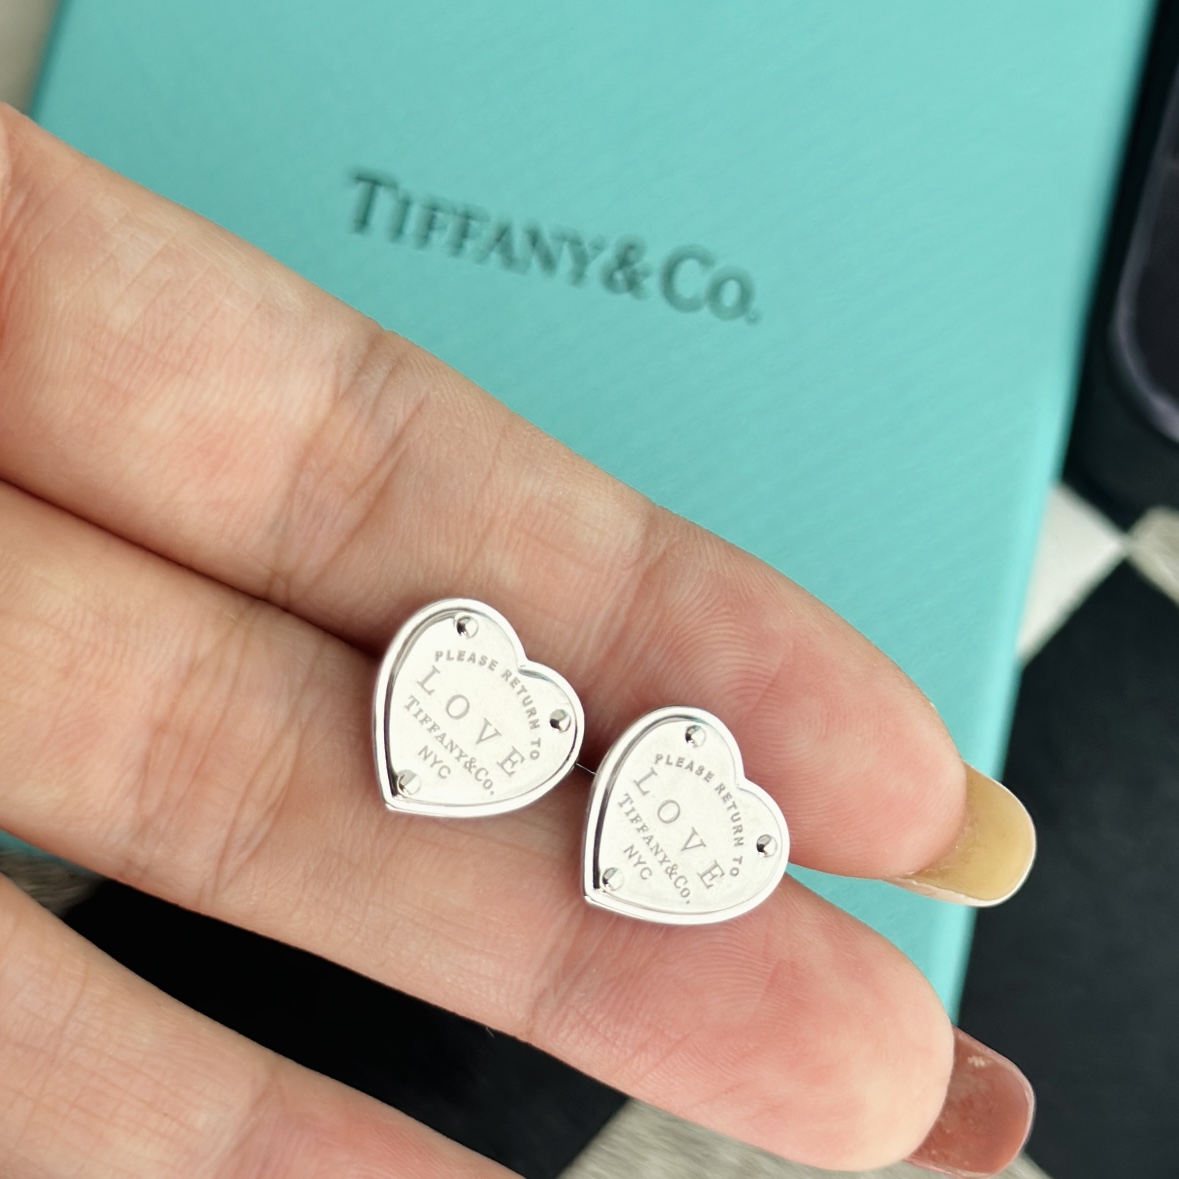 Tiffany&CO Heart Tag Earrings - DesignerGu